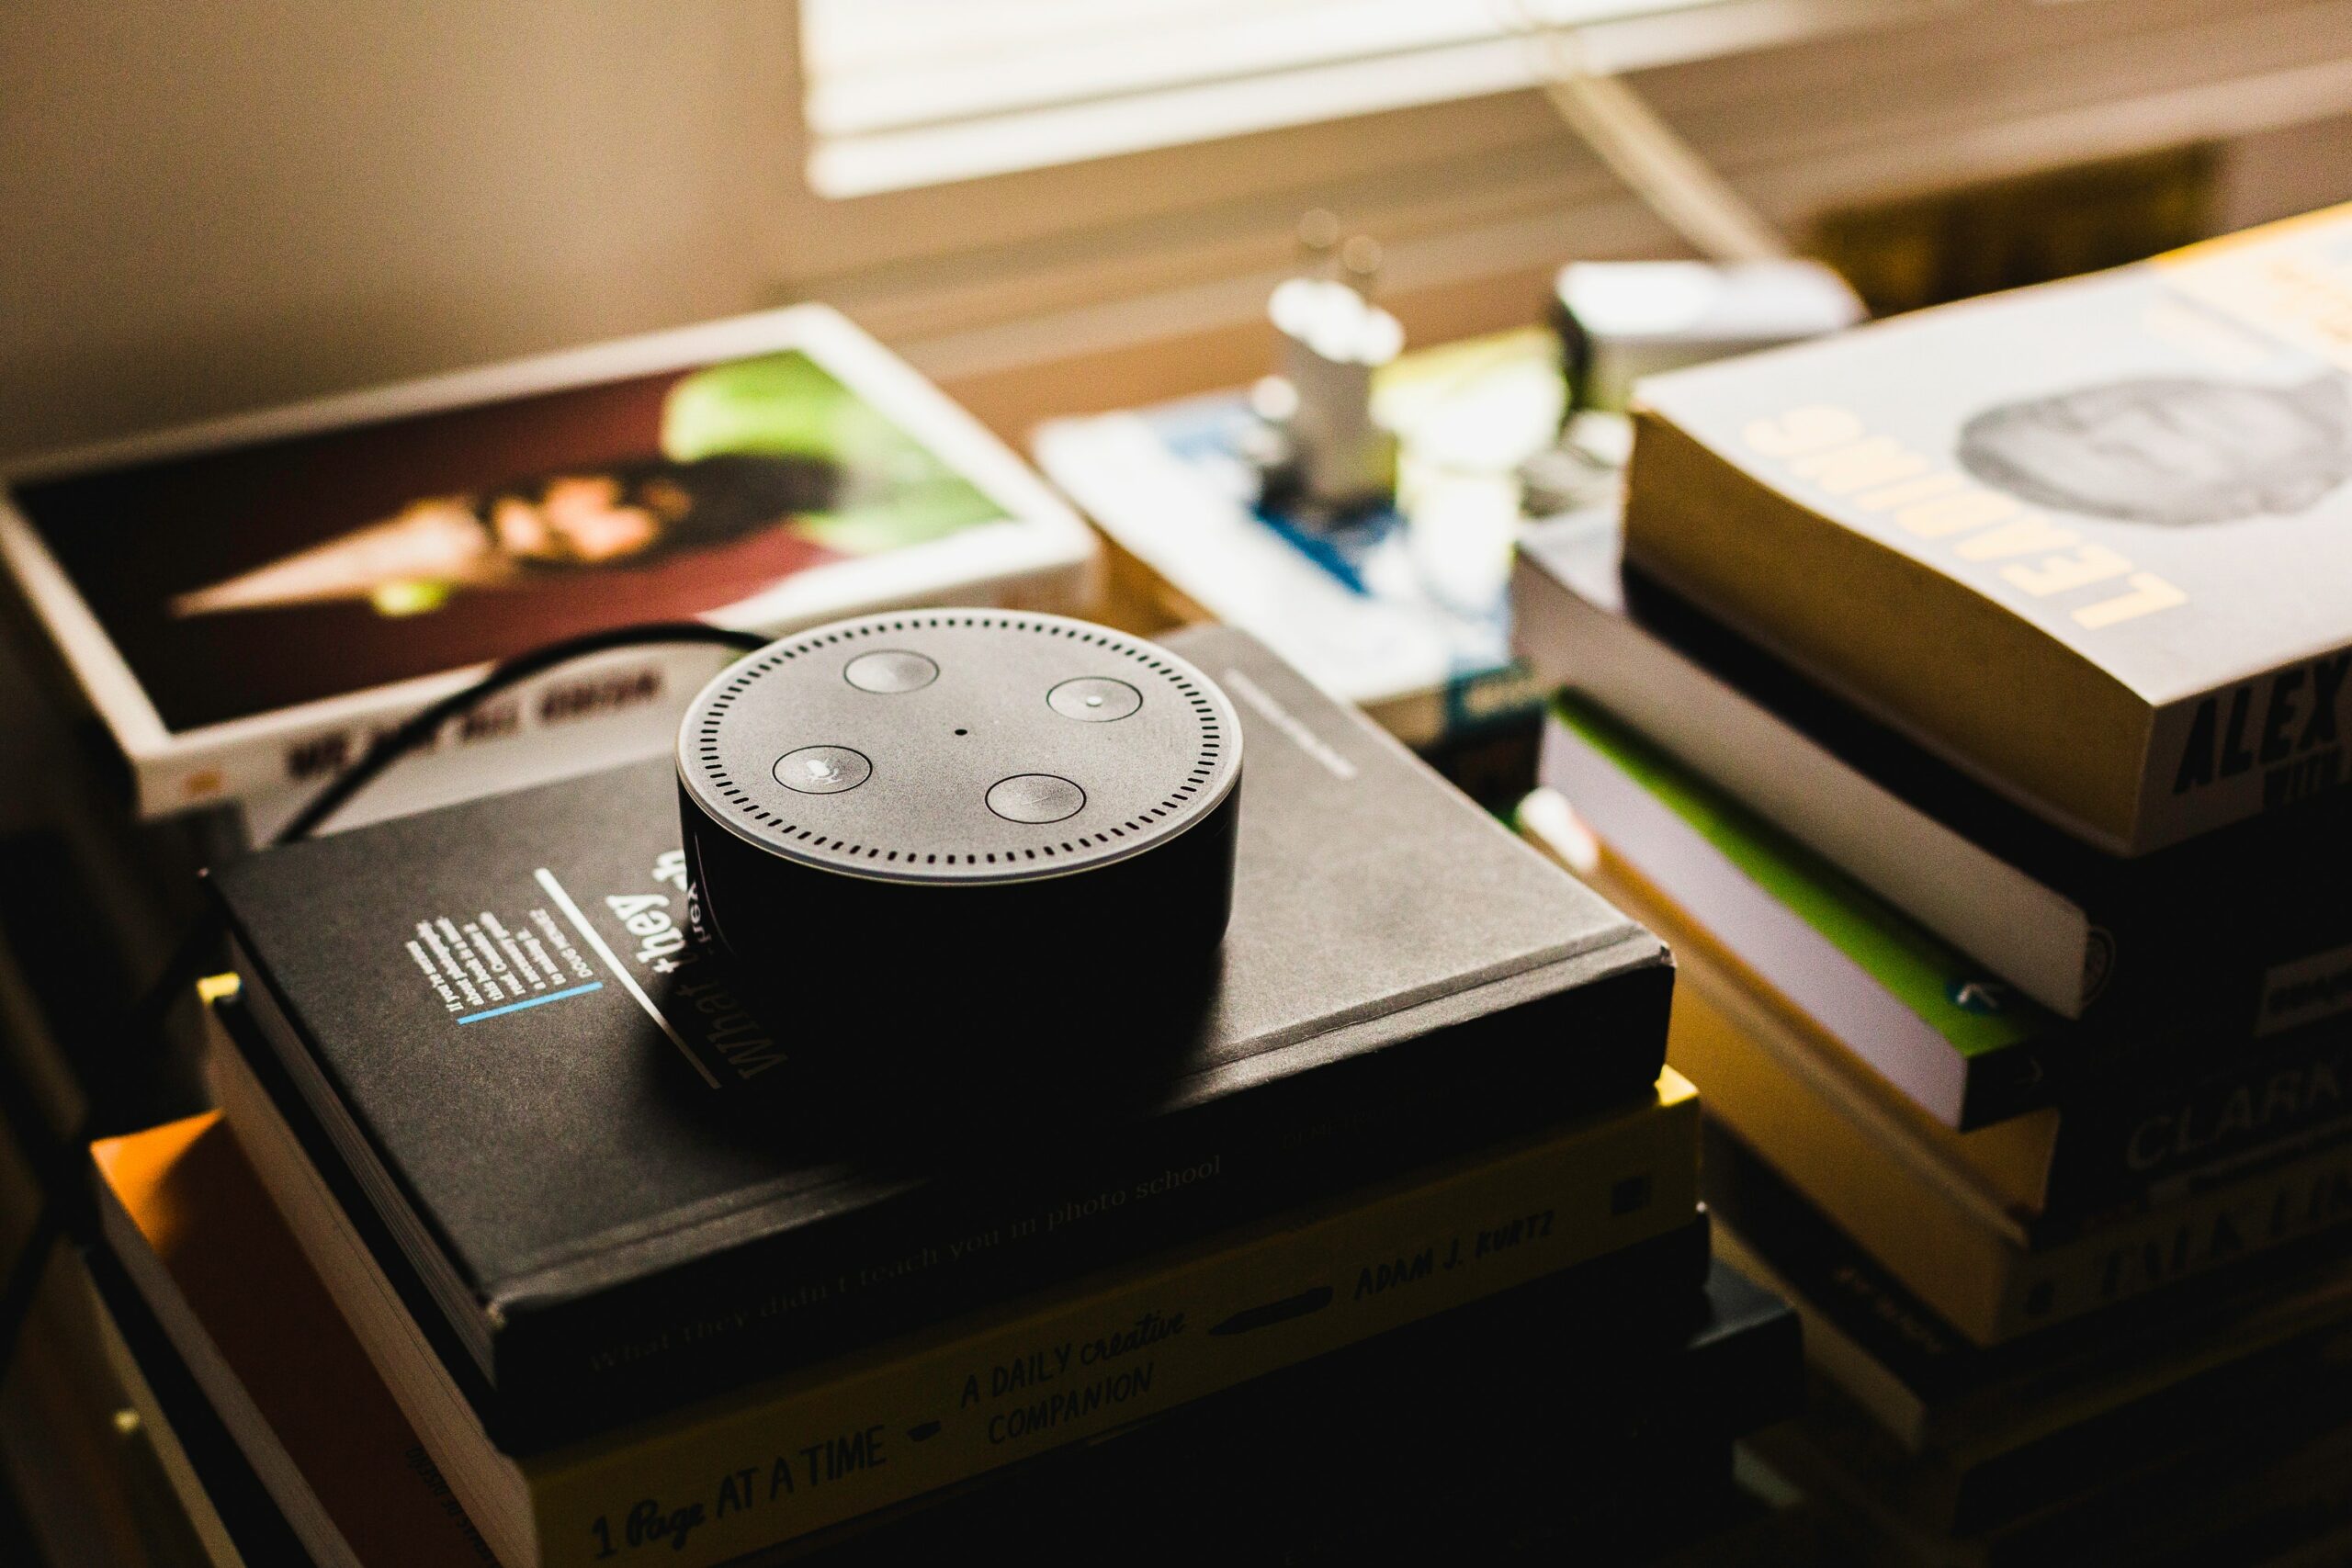 Amazon Alexa Echo Dot resting on a stack of books.